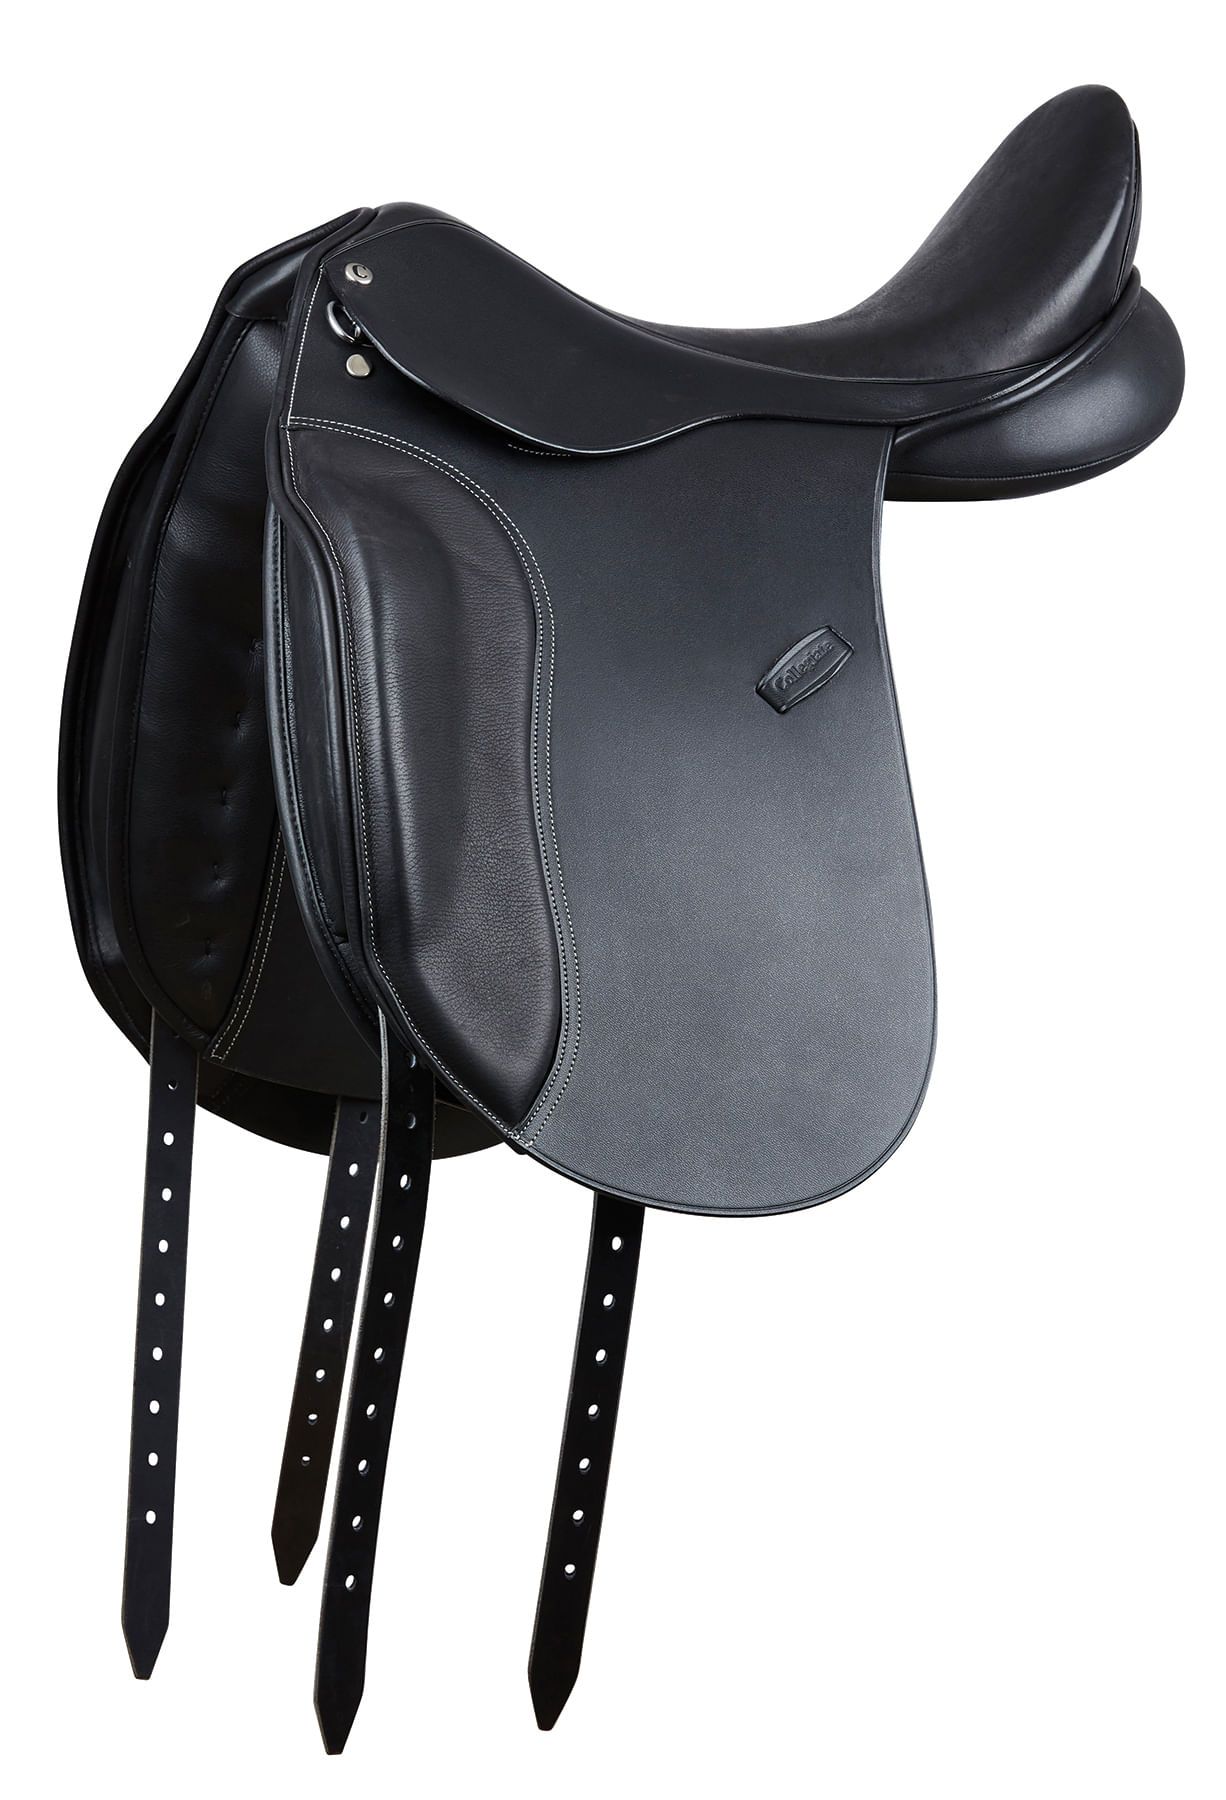 Collegiate Lectern Dressage Saddle – M & M Tack Shop